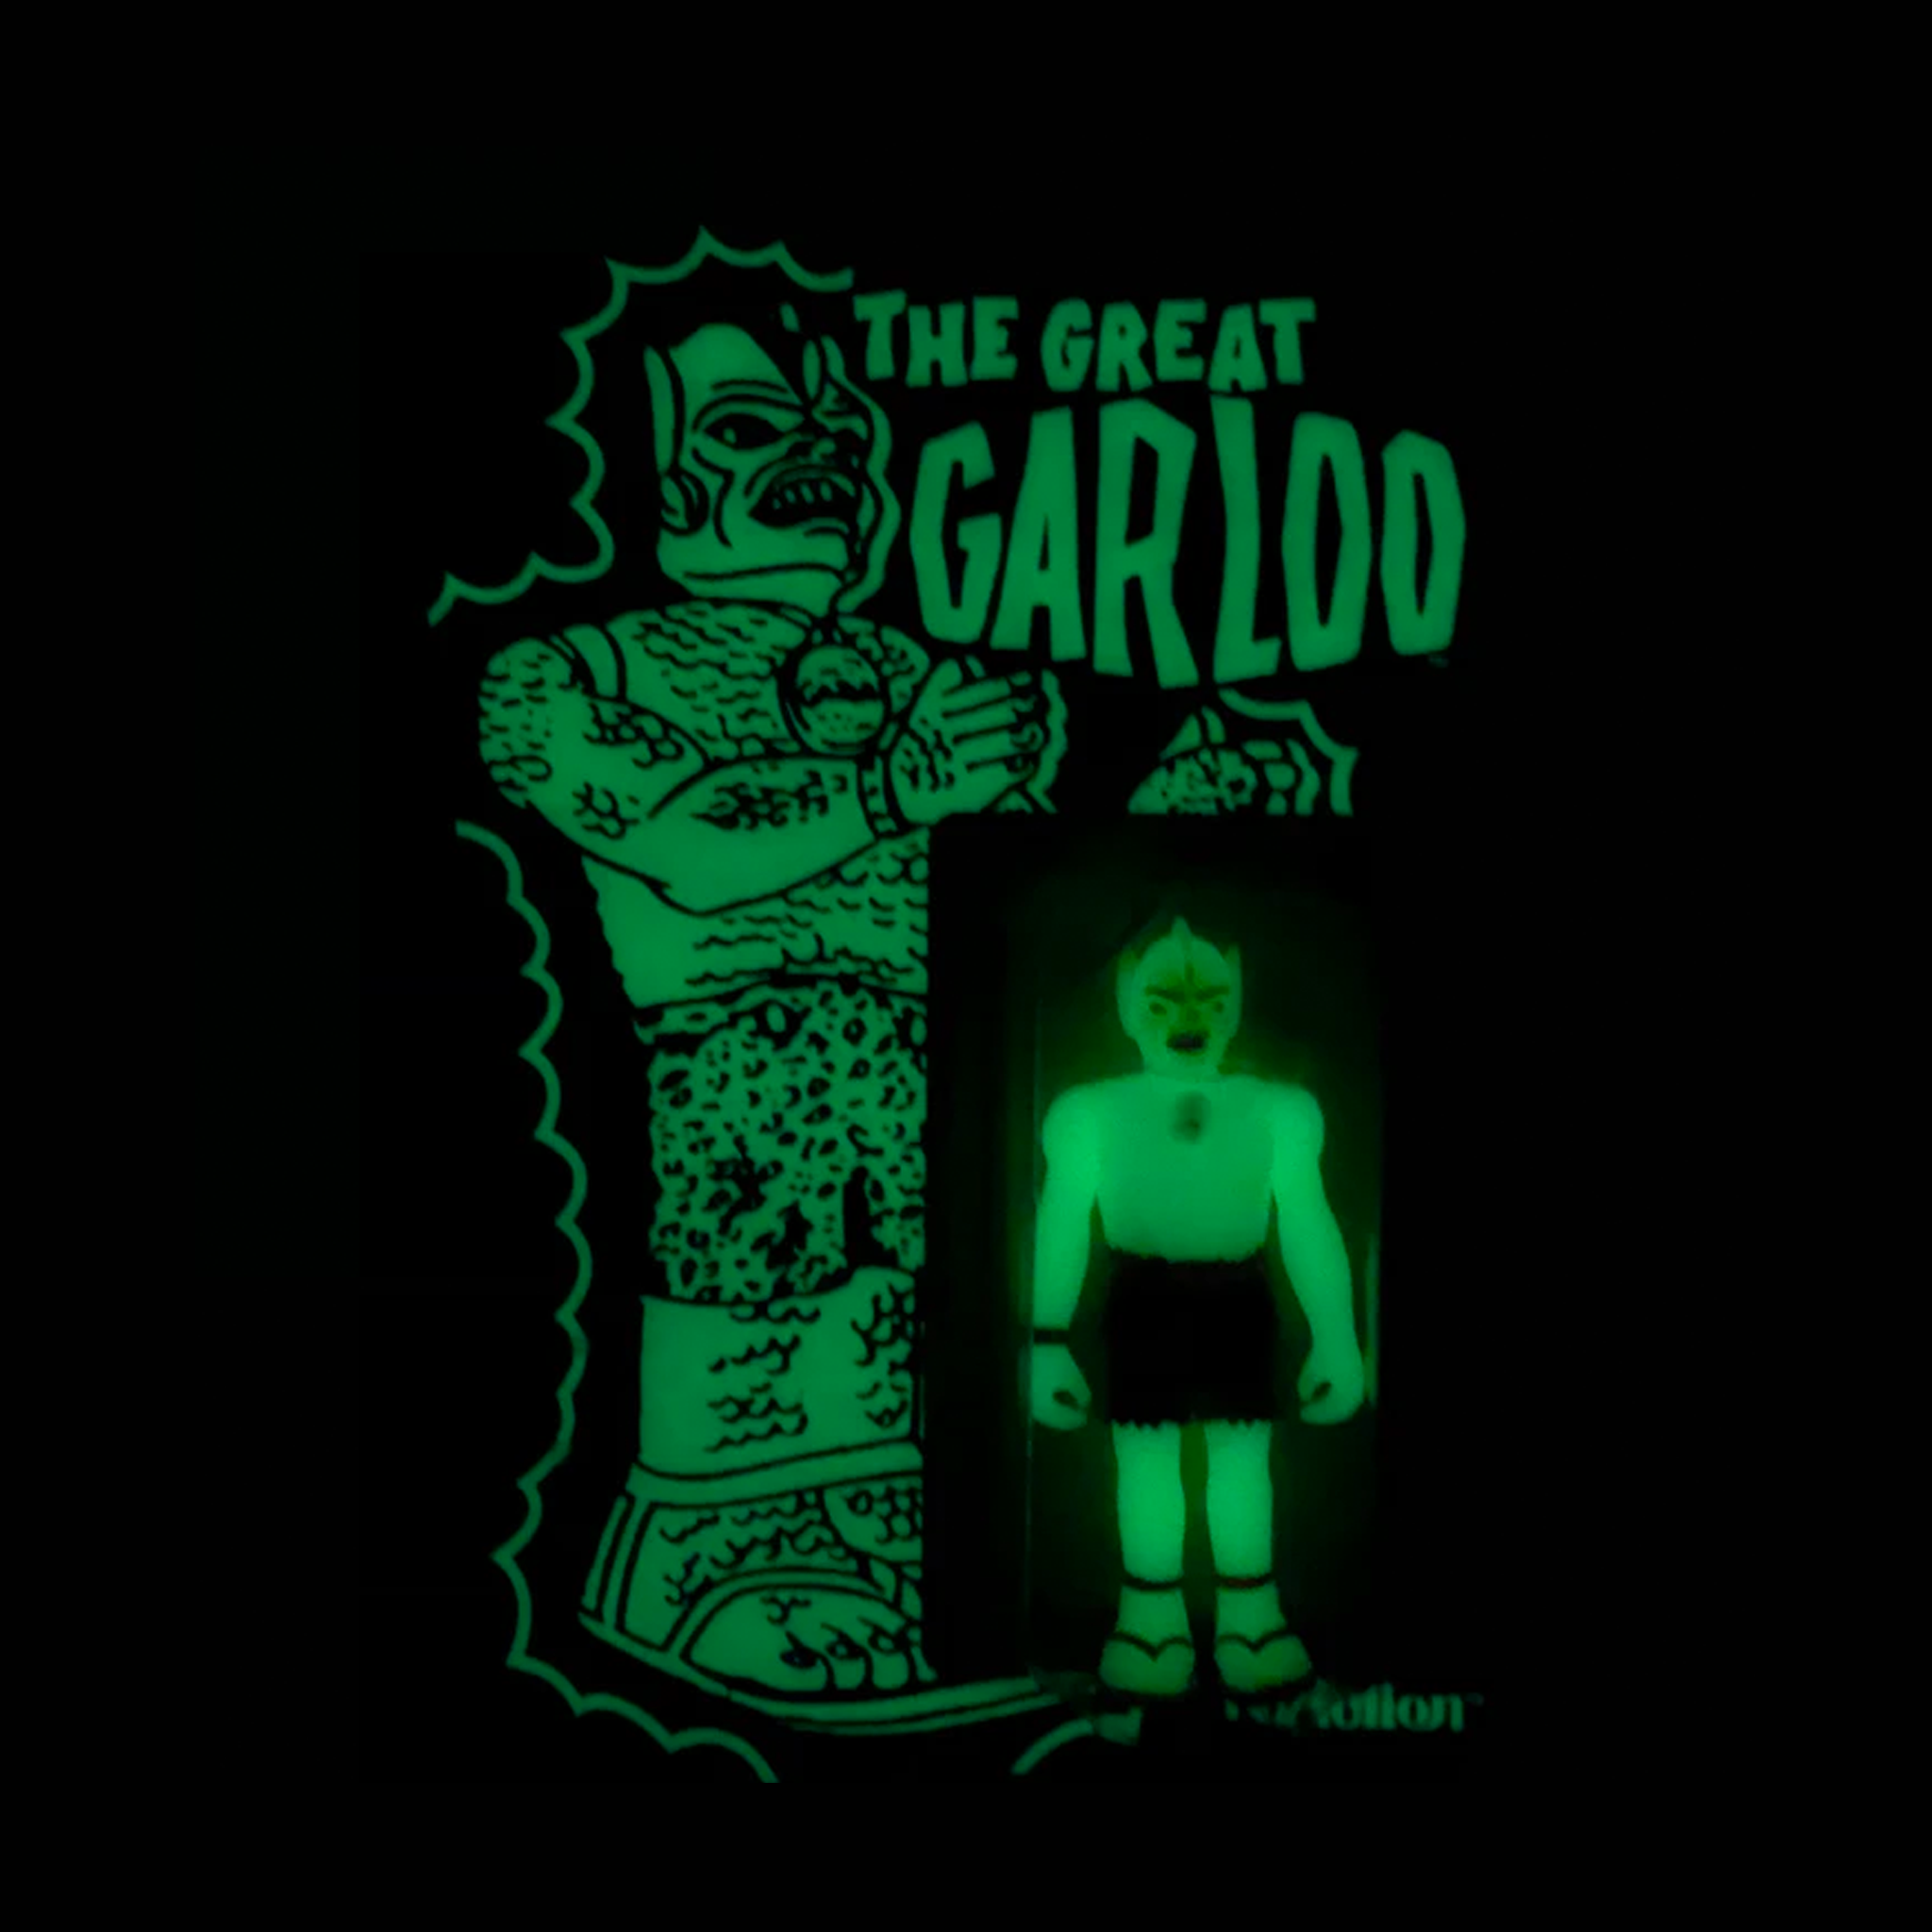 The Great Garloo ReAction Figure - The Great Garloo (Glow in the Dark)